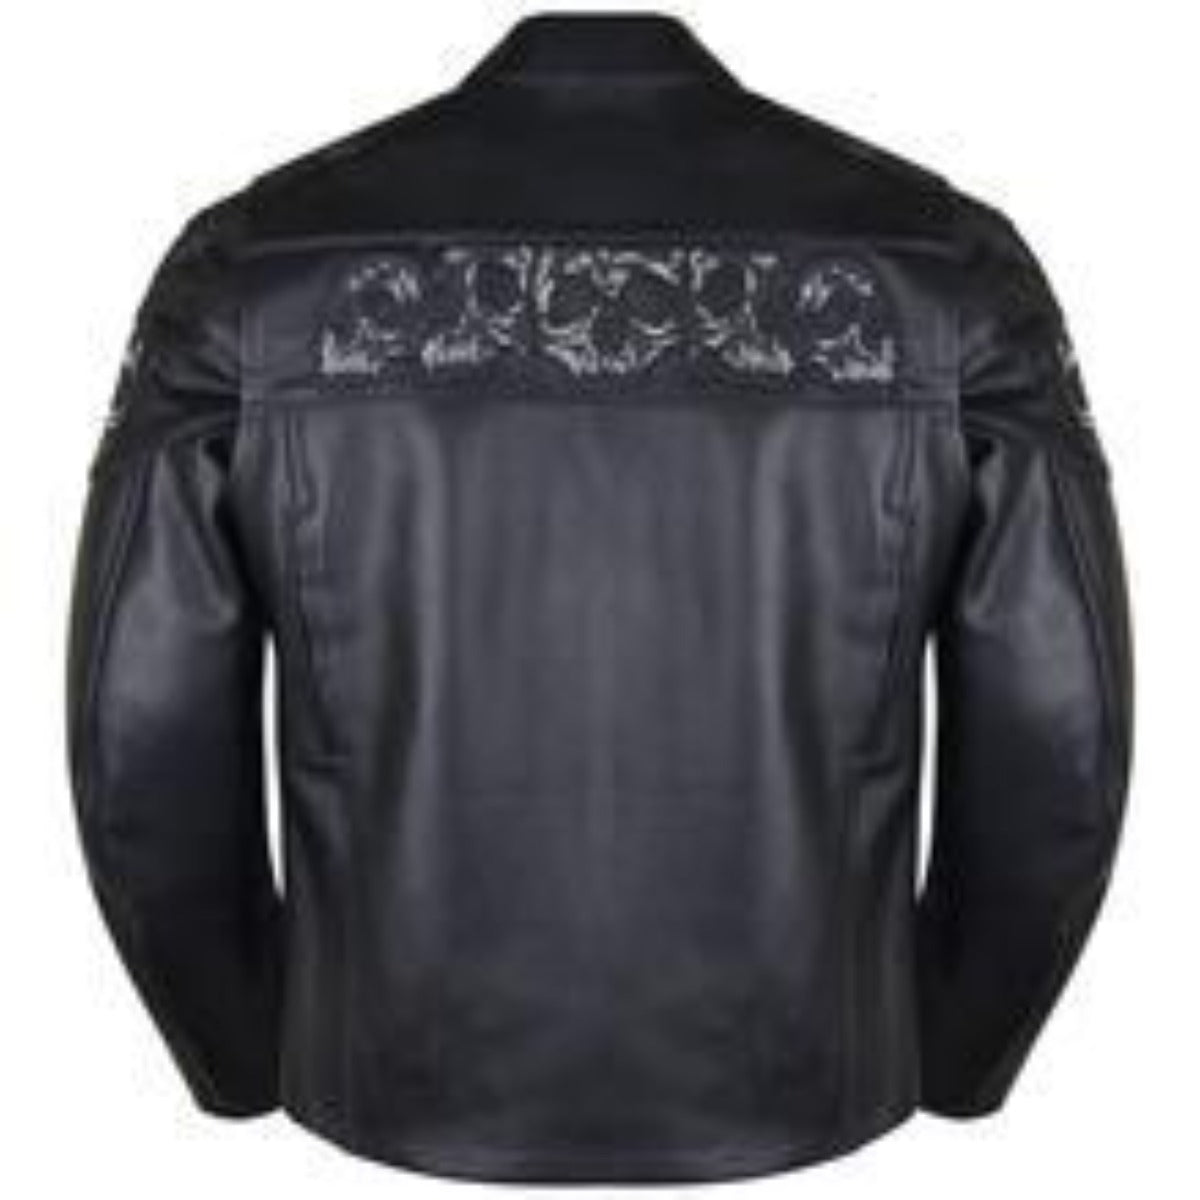 Vance Leather Reflective Skull Cowhide Motorcycle Jacket